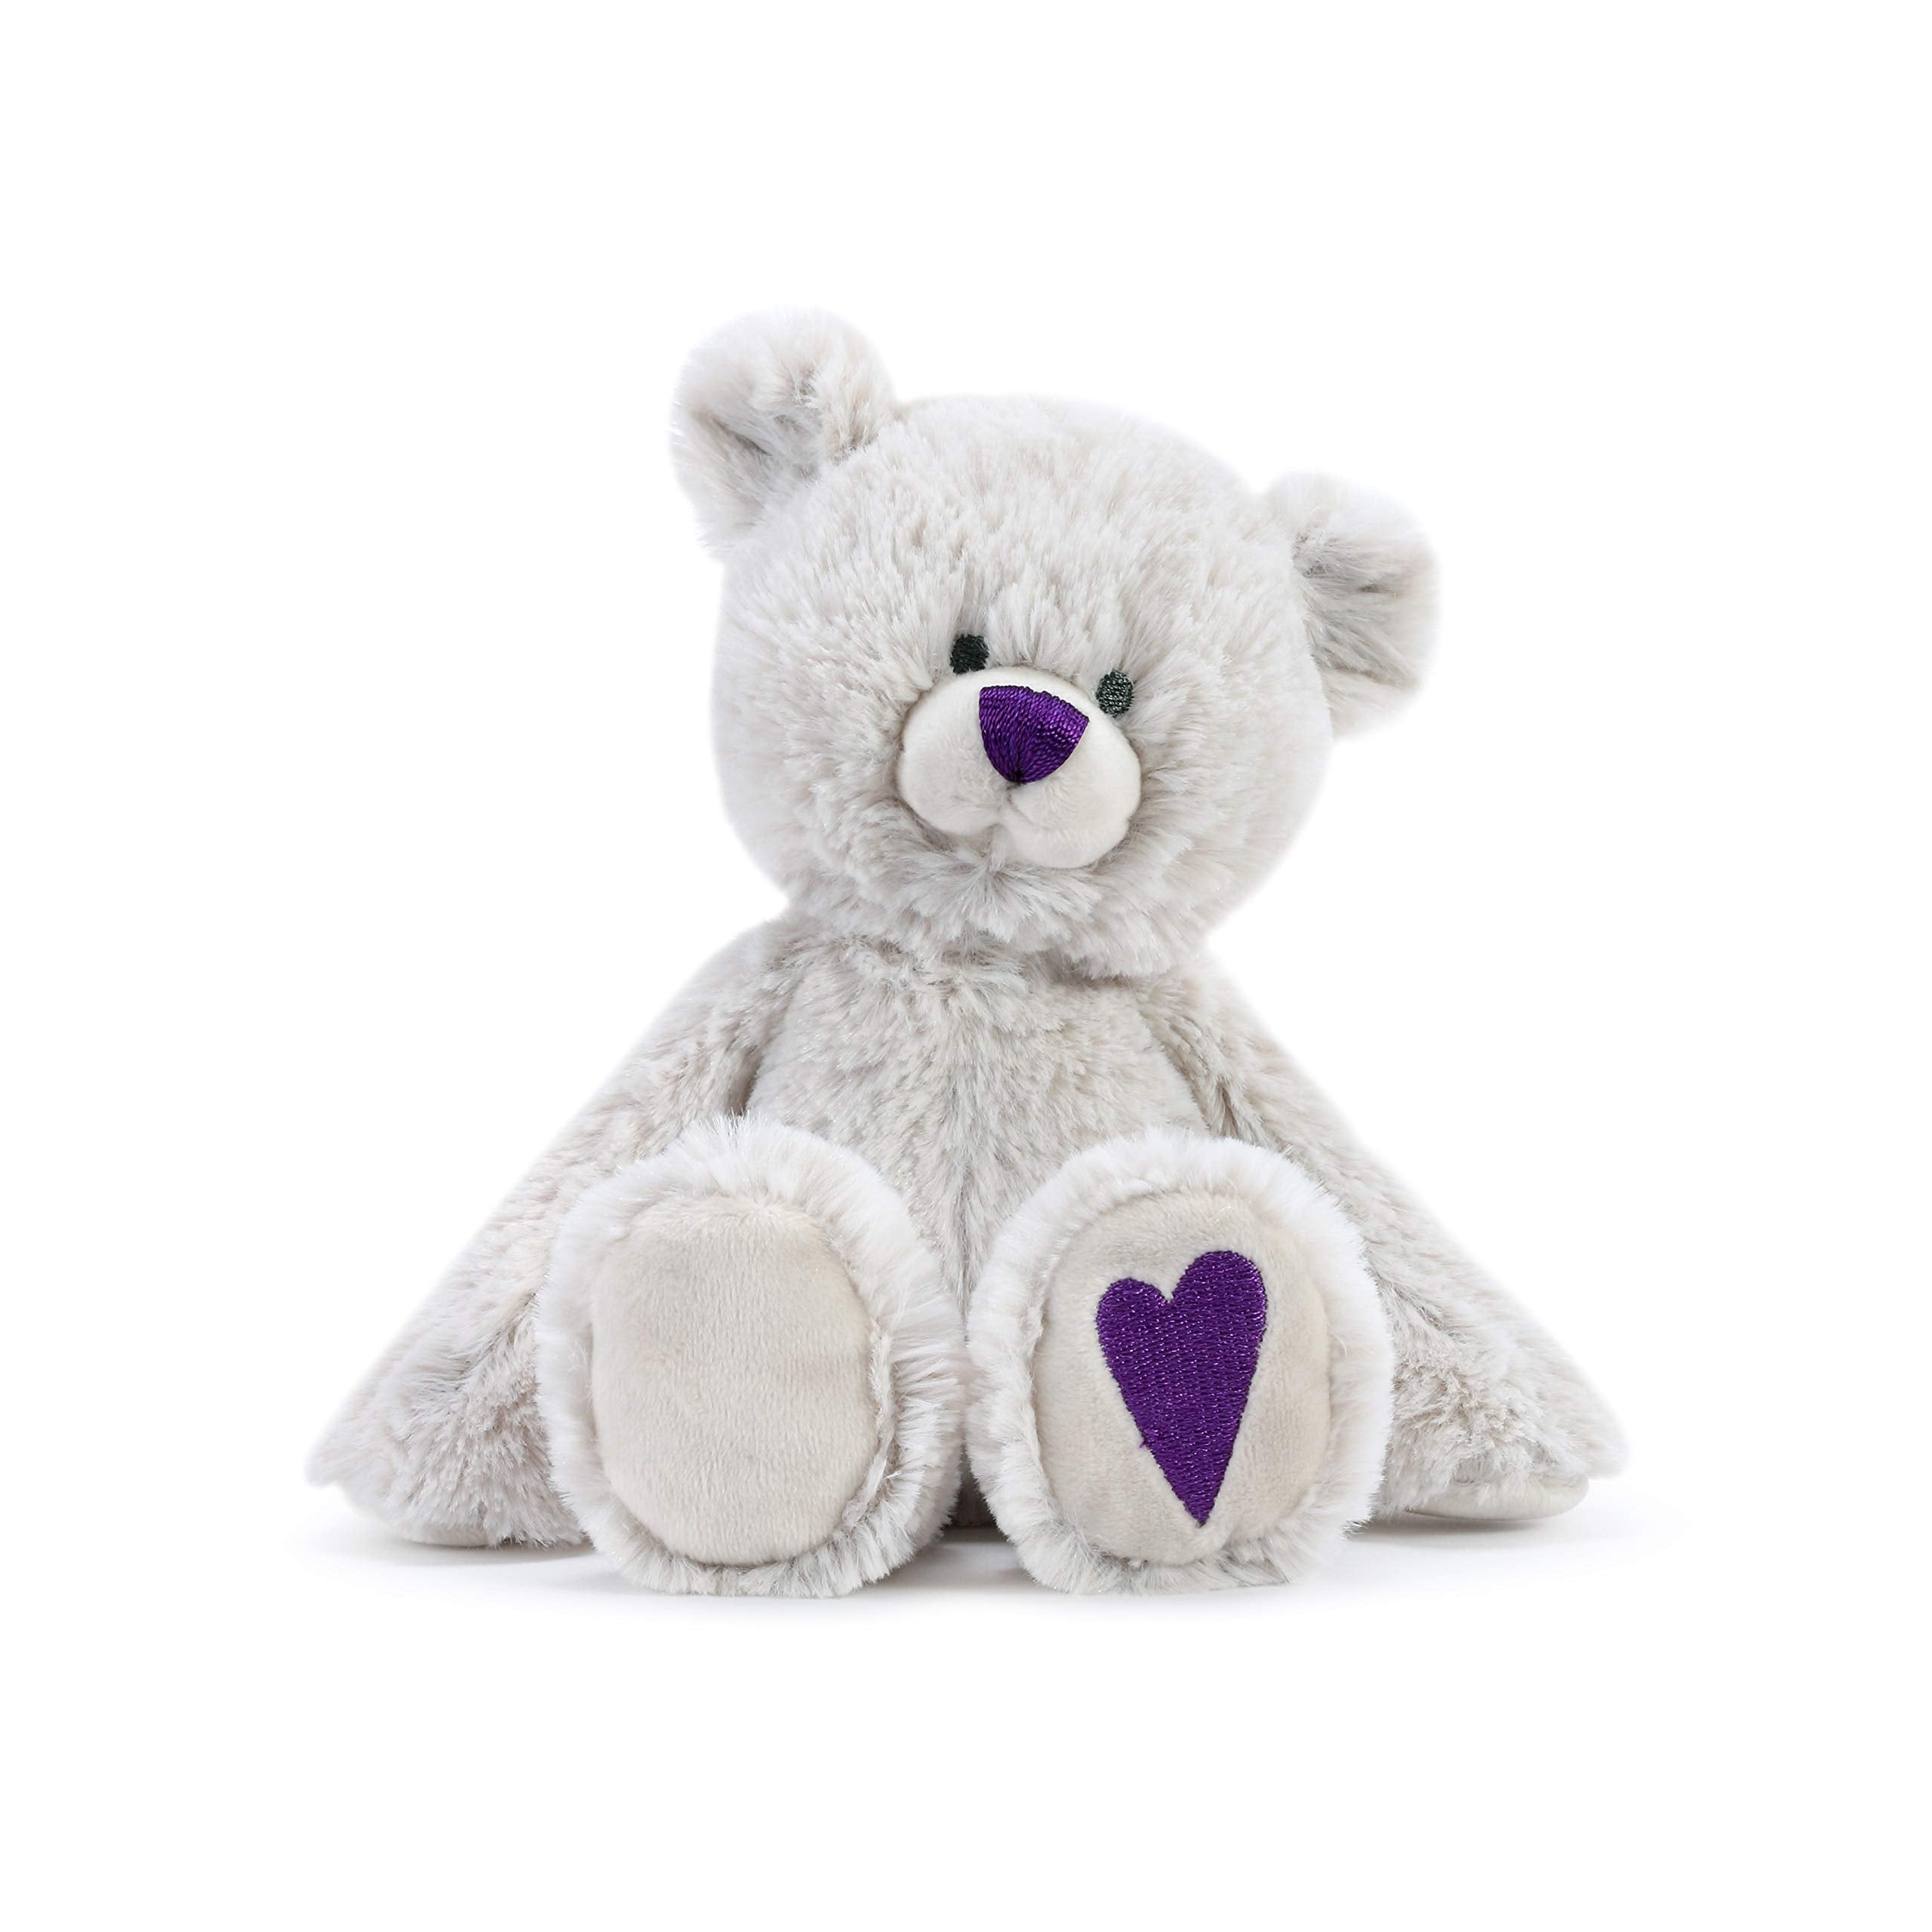 DEMDACO Curious Purple Amethyst Color February Birthstone 8.5 inch Children's Plush Stuffed Animal Toy